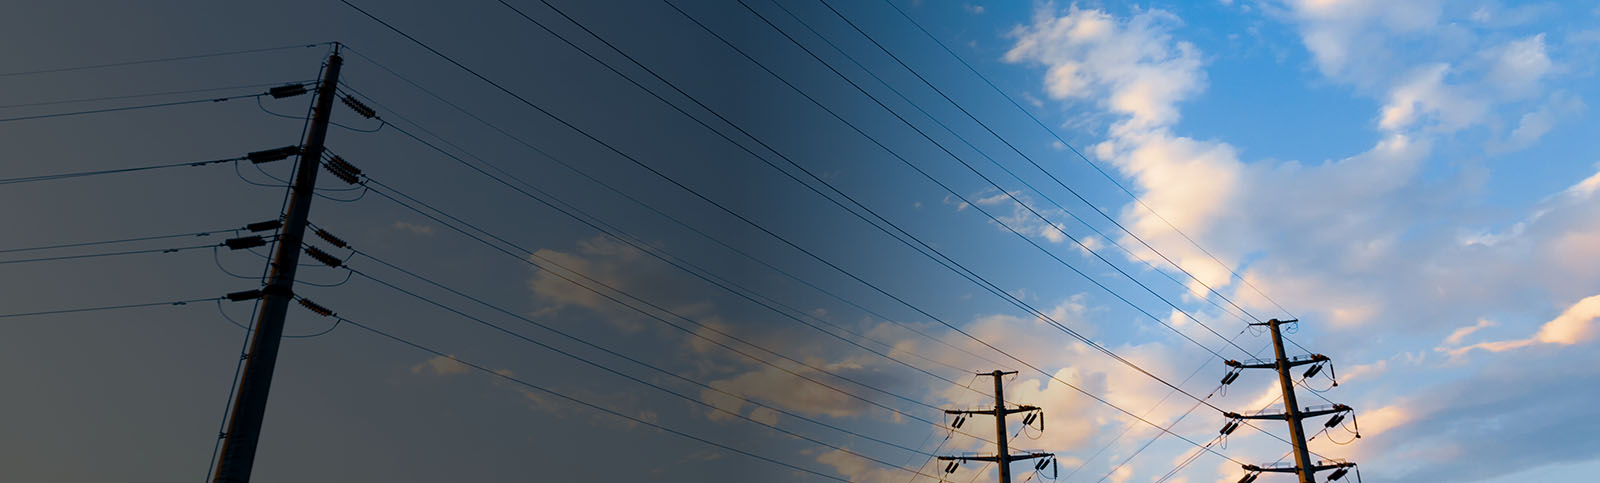 Power lines in Nashville, TN